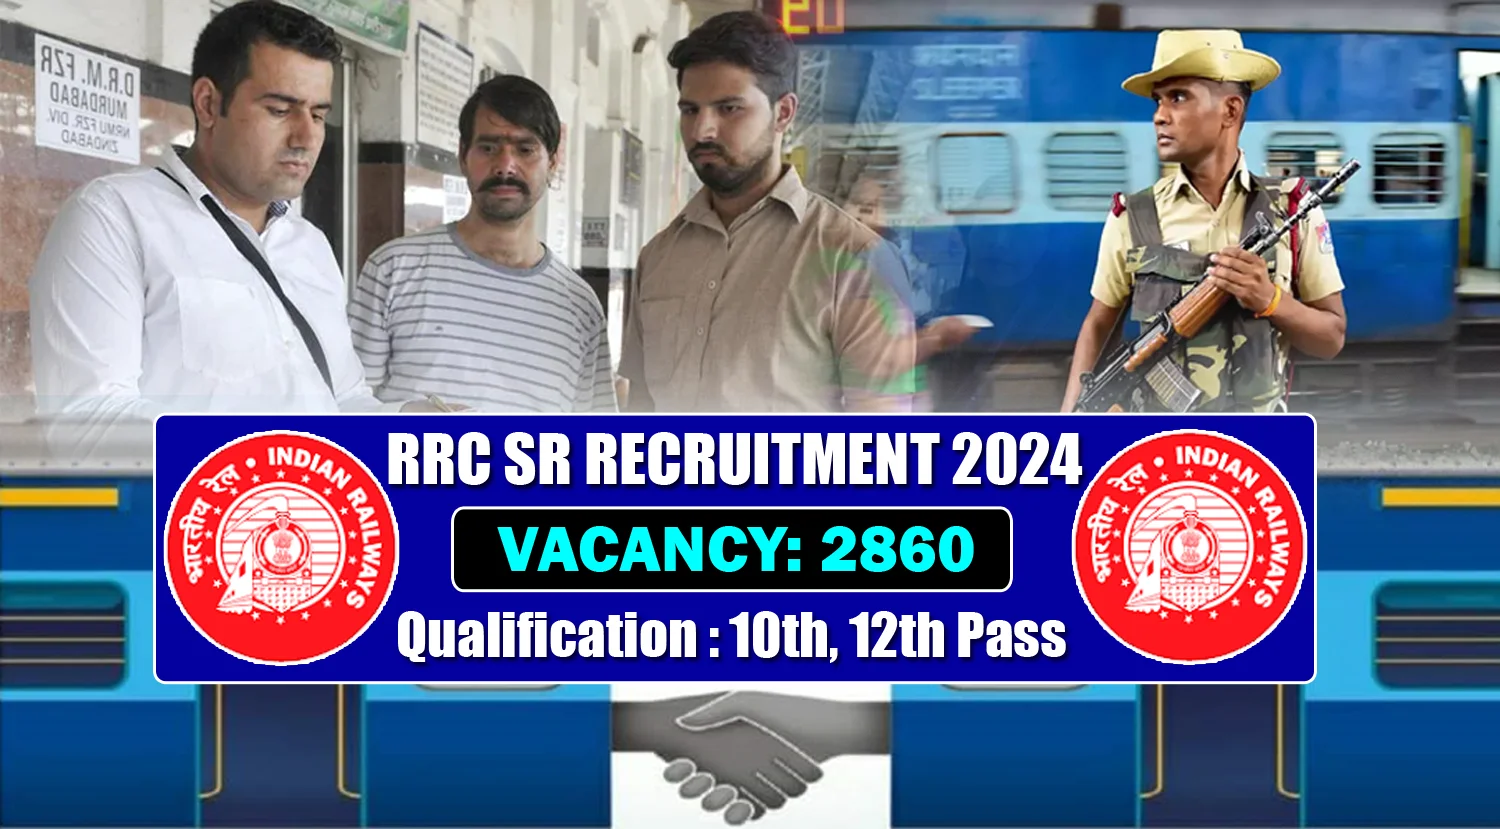 RRC SR Recruitment 2024 Notification Out for 2860 Vacancies, Check RRC SR Apprentice Recruitment